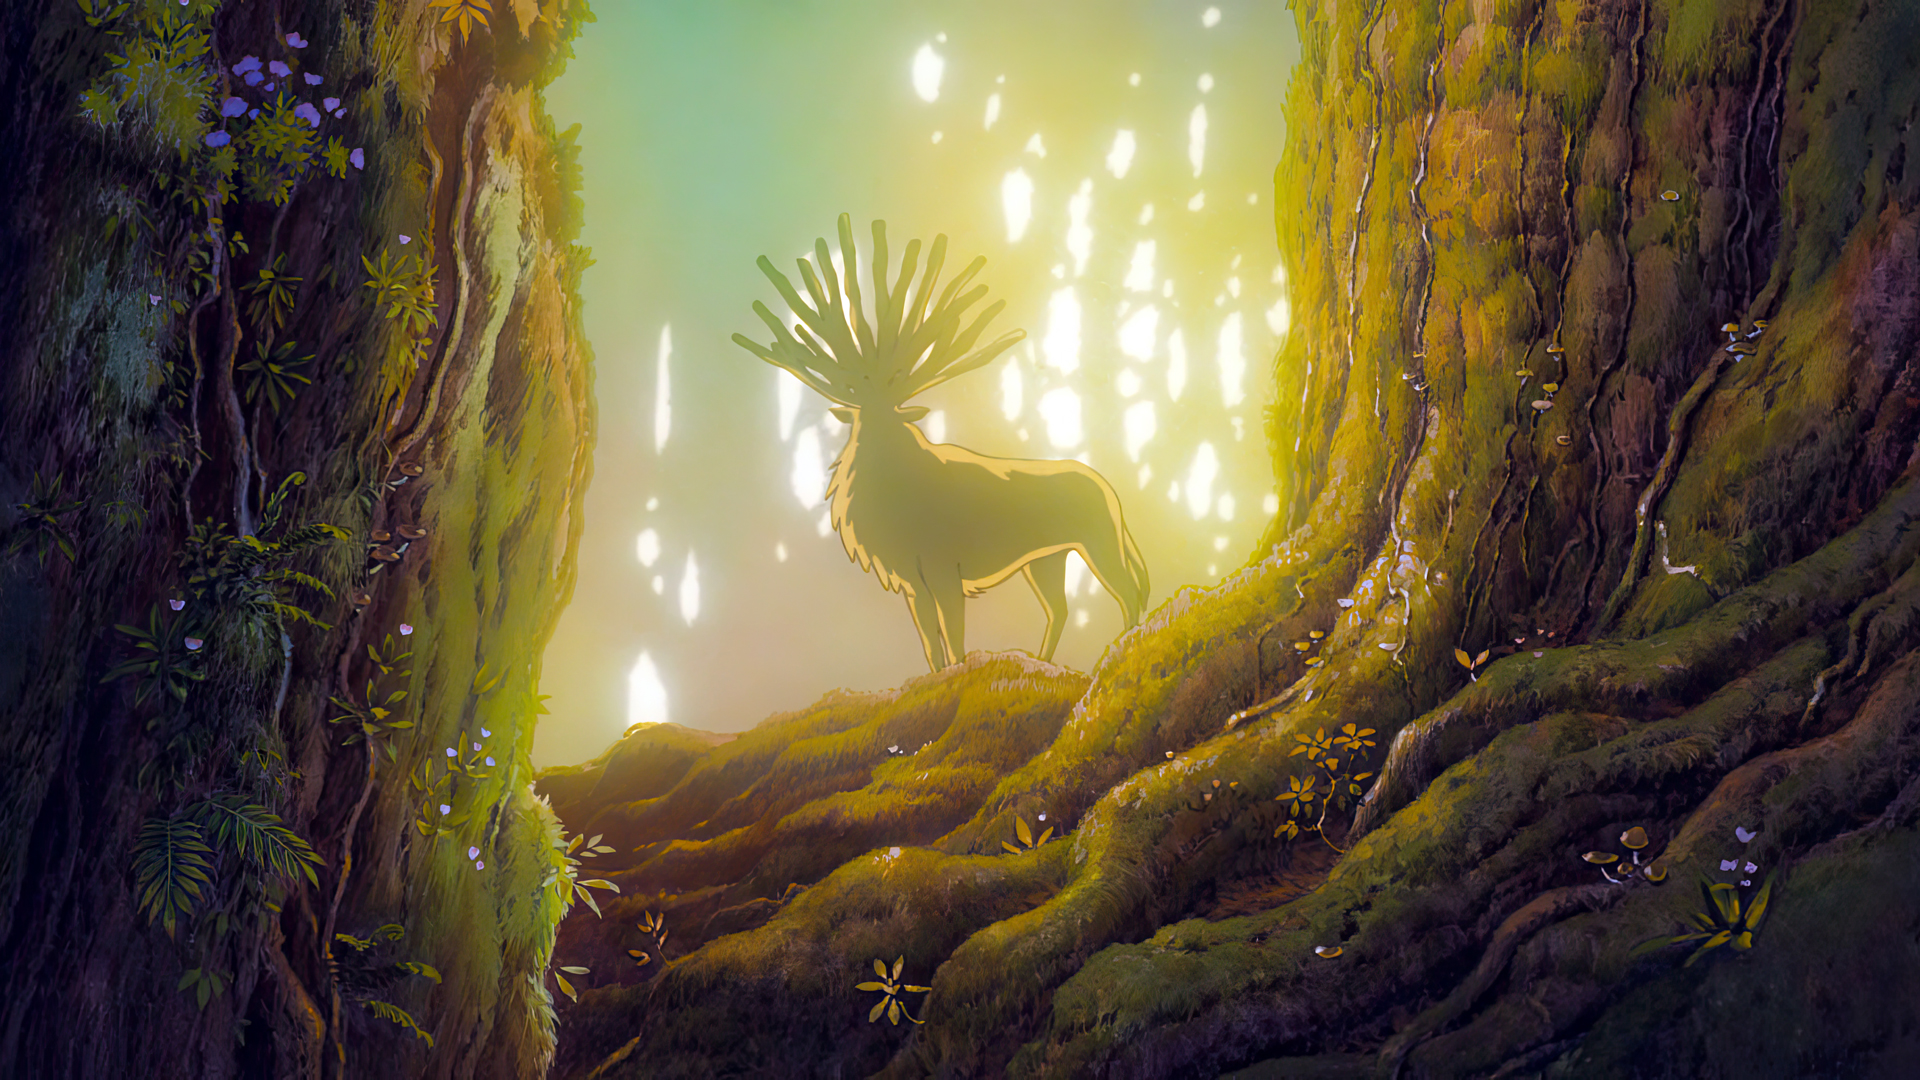 Anime 1920x1080 Princess Mononoke animated movies film stills anime animation trees forest roots Forest Spirit Shishigami Deer God Studio Ghibli Hayao Miyazaki